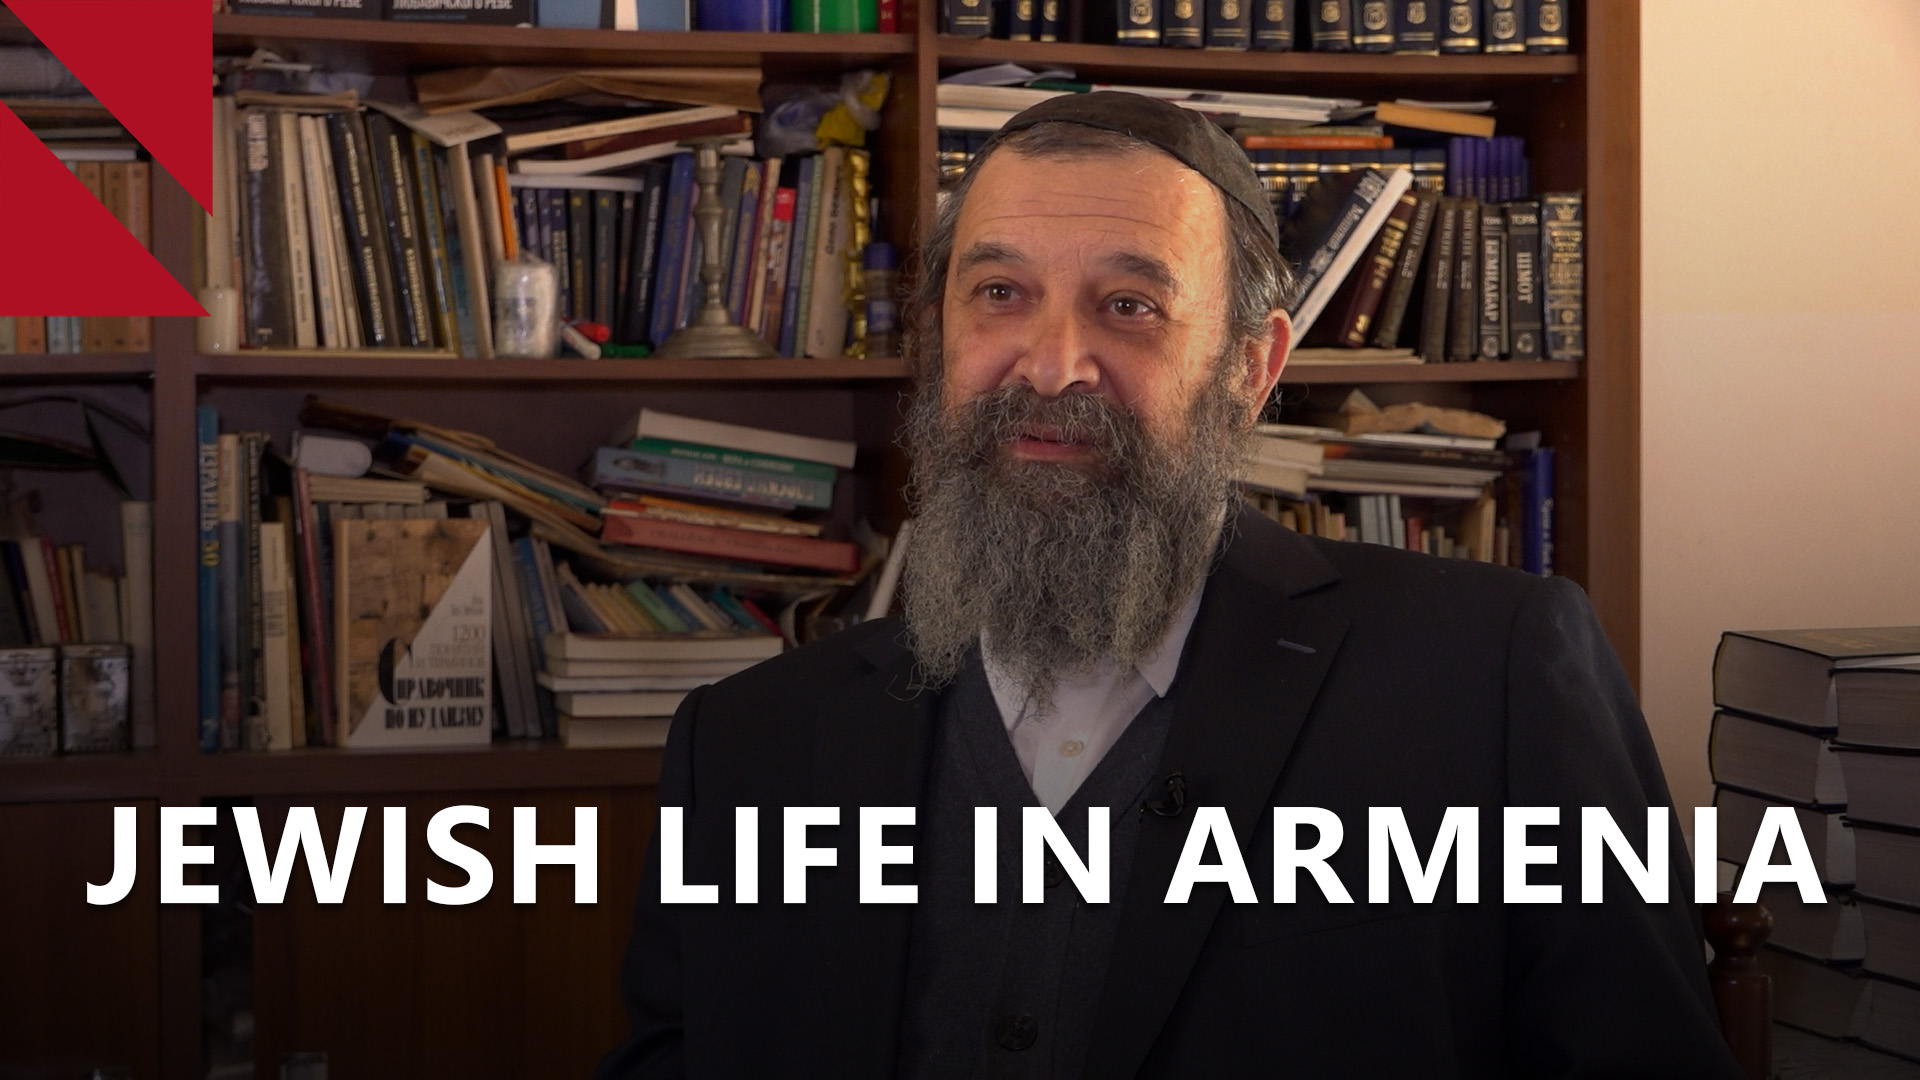 A conversation with Armenia’s chief rabbi